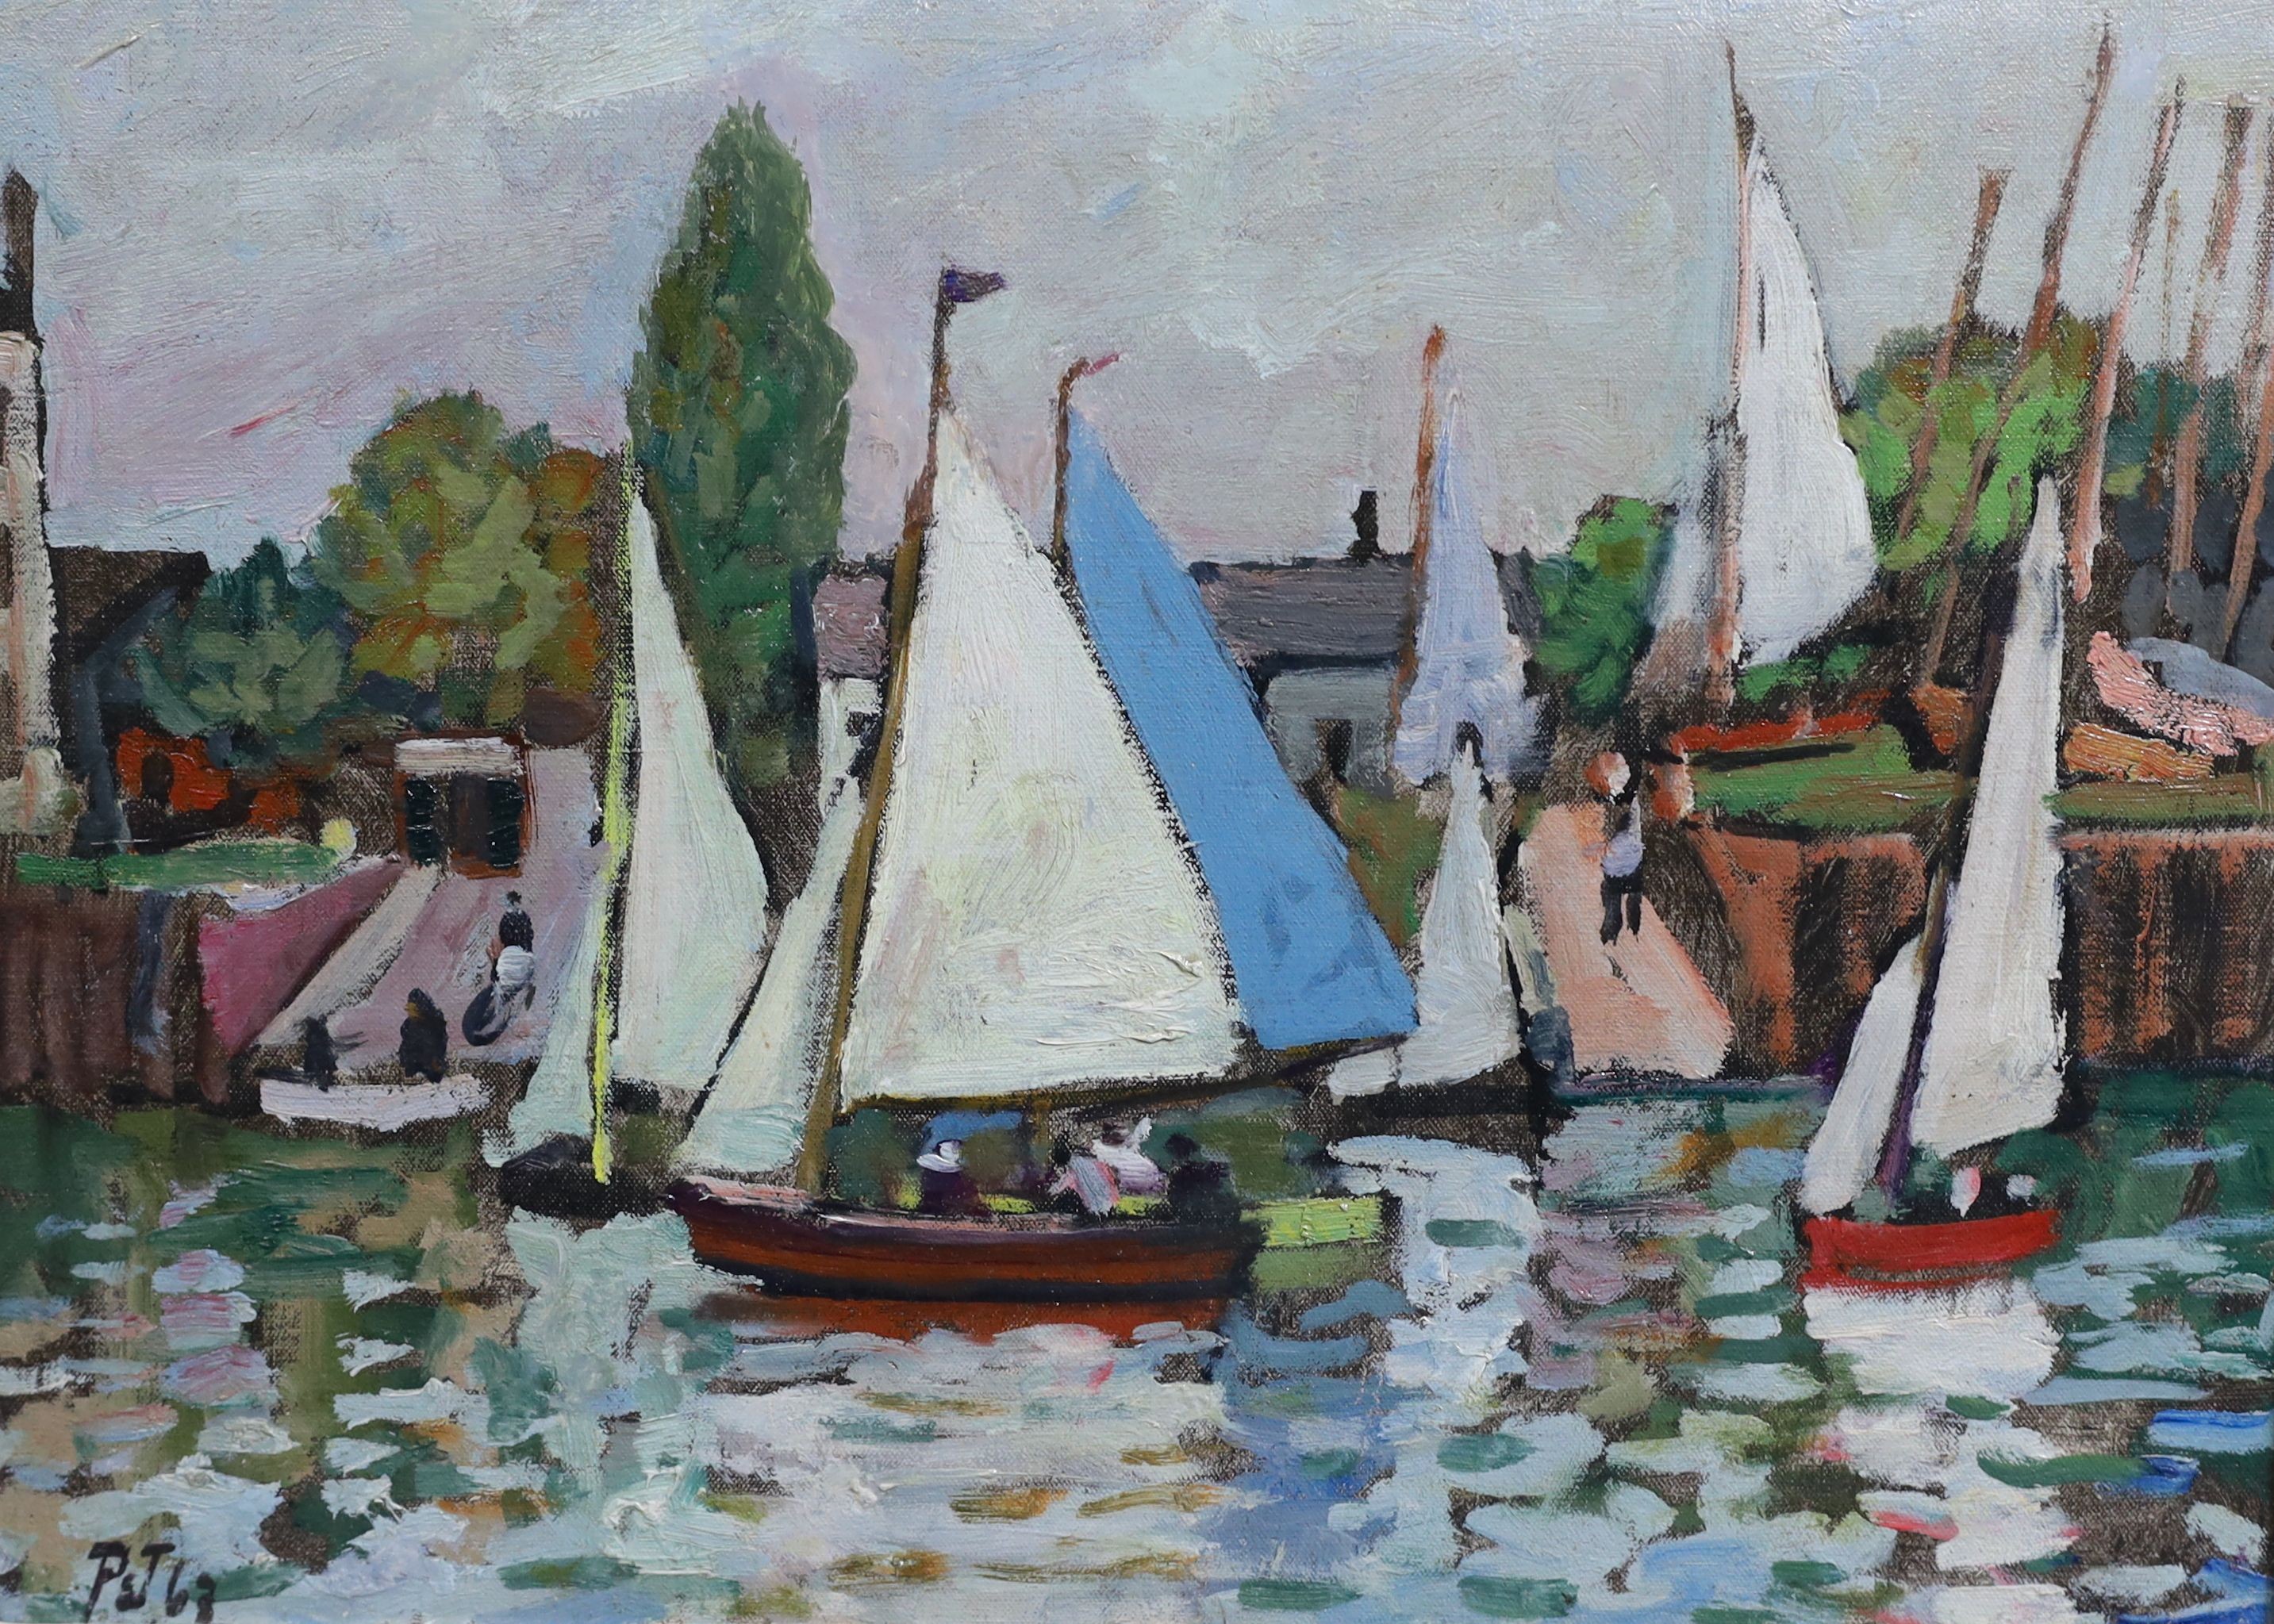 Llewellyn Petley Jones (1908-1986), Sailing boats on a river, oil on canvas, 30 x 41cm